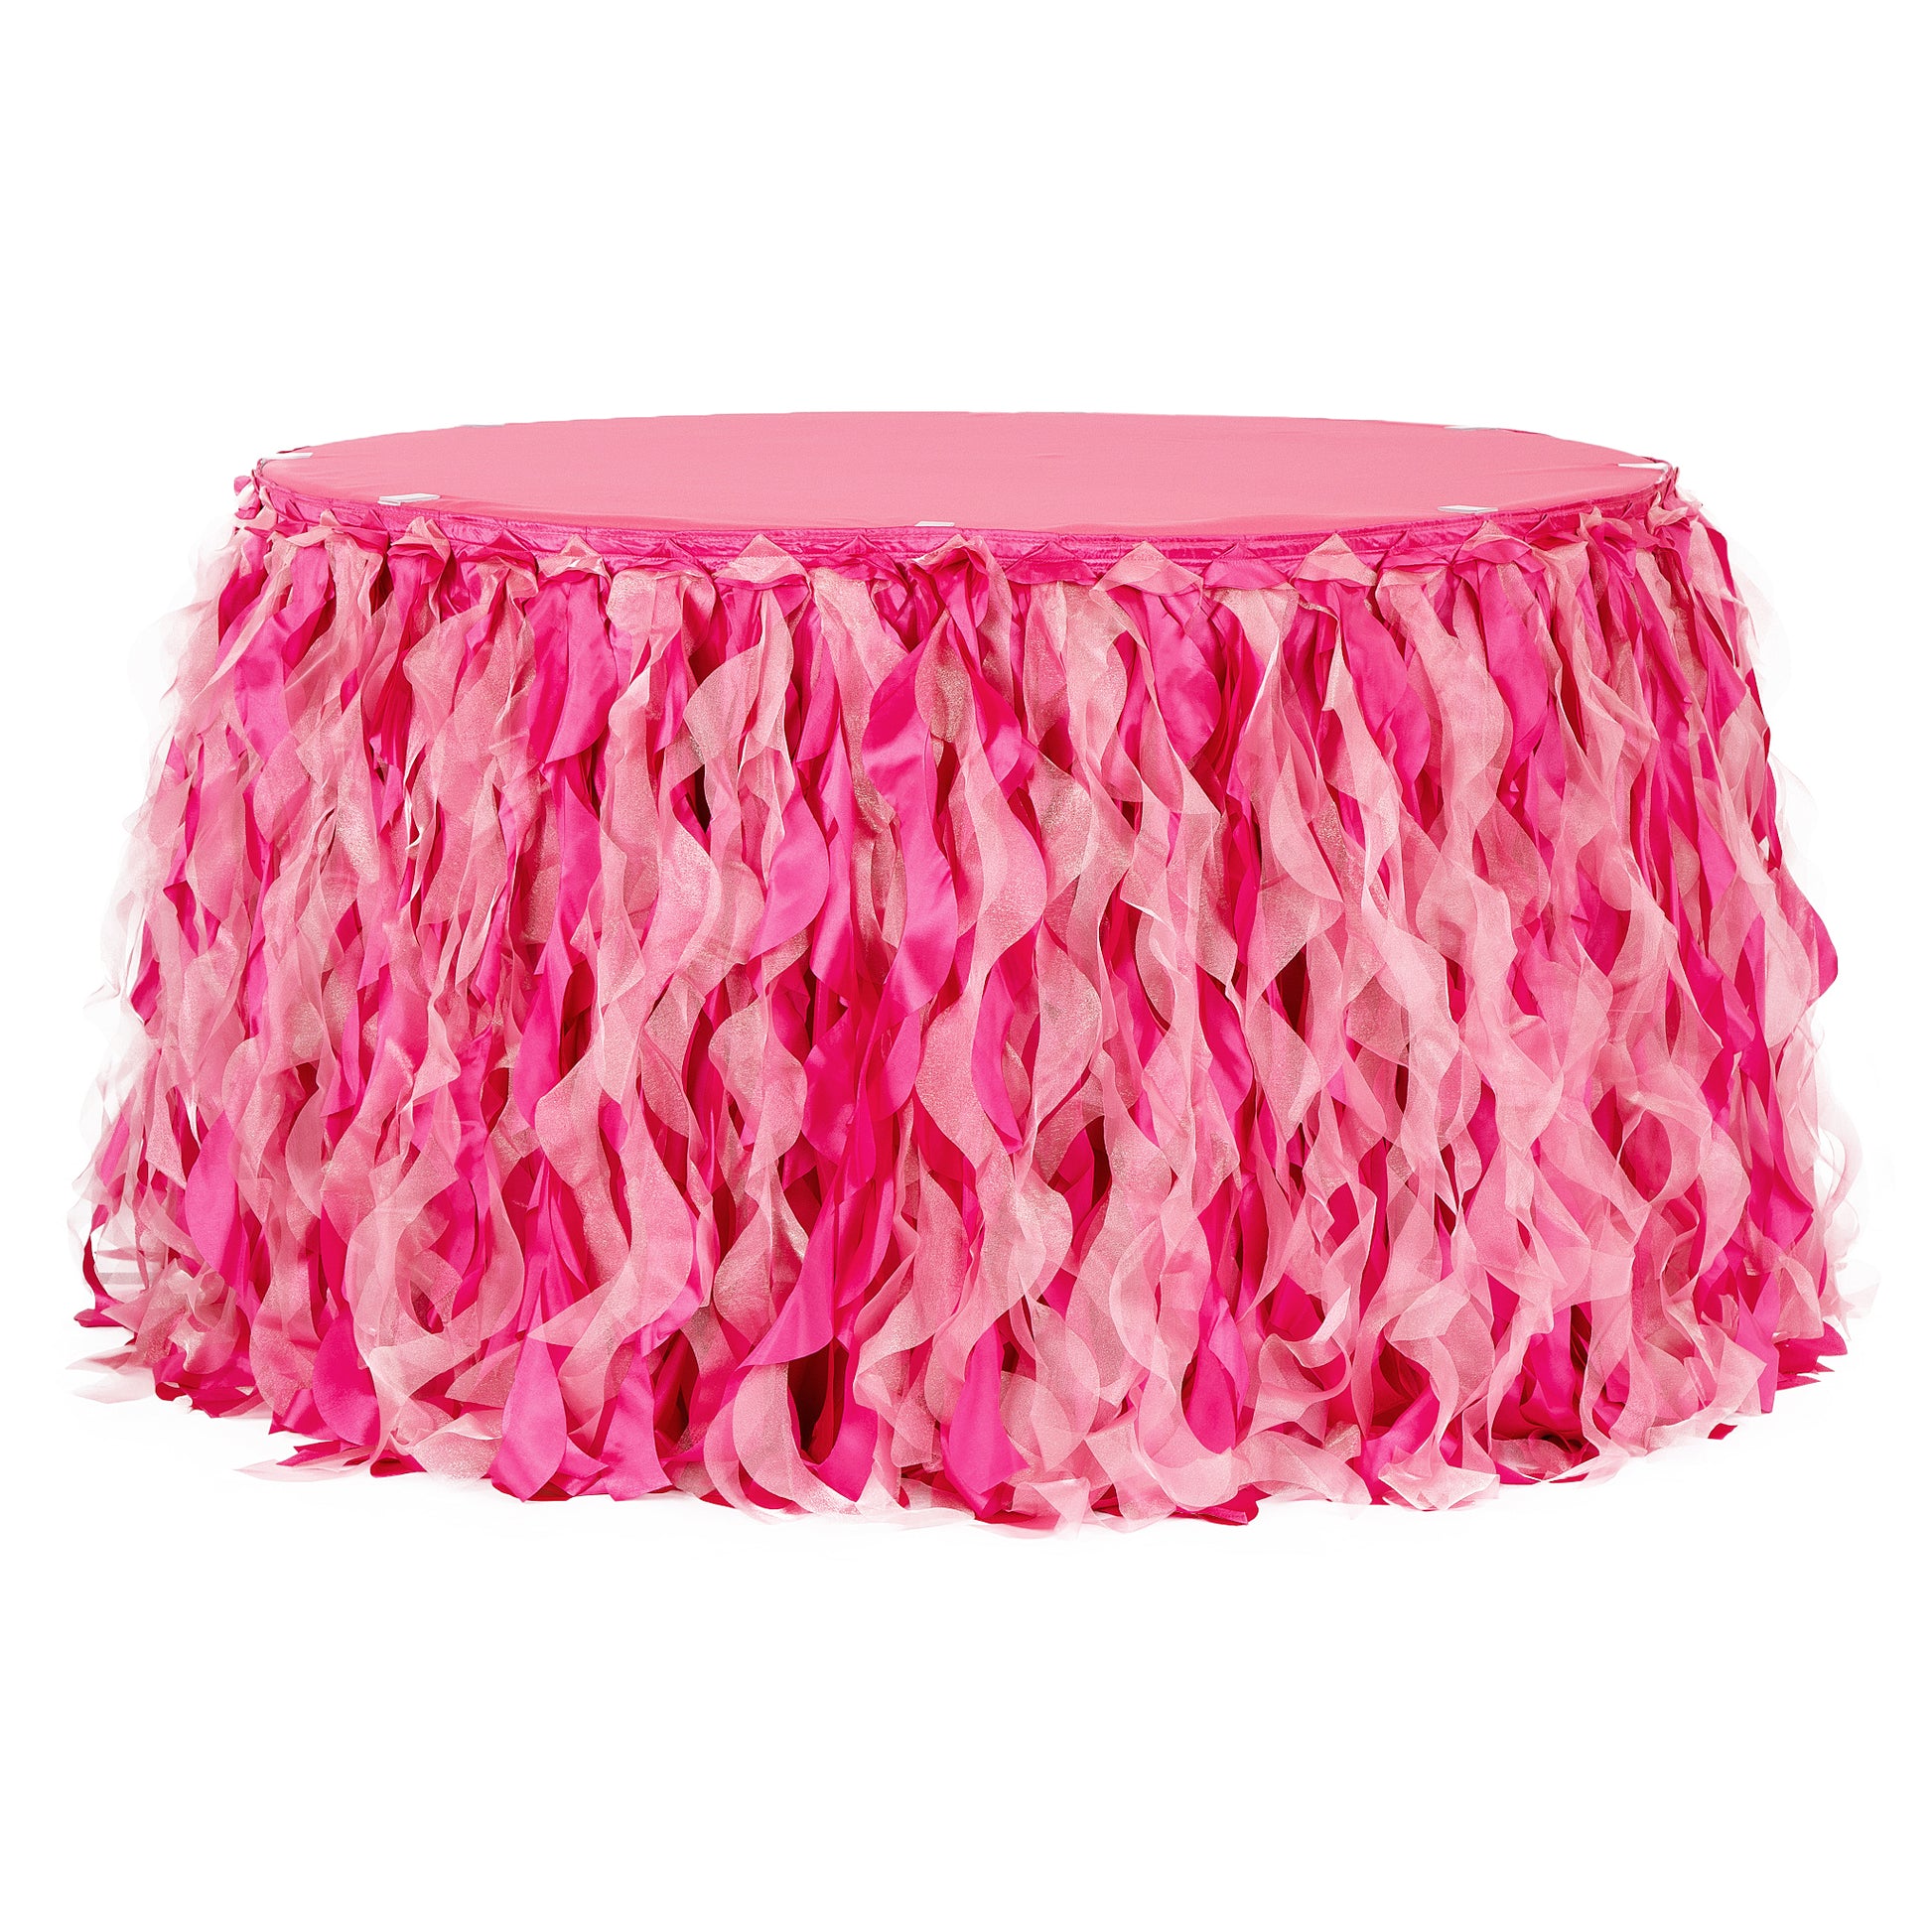 Curly Willow 14ft Table Skirt - Fuchsia - CV Linens